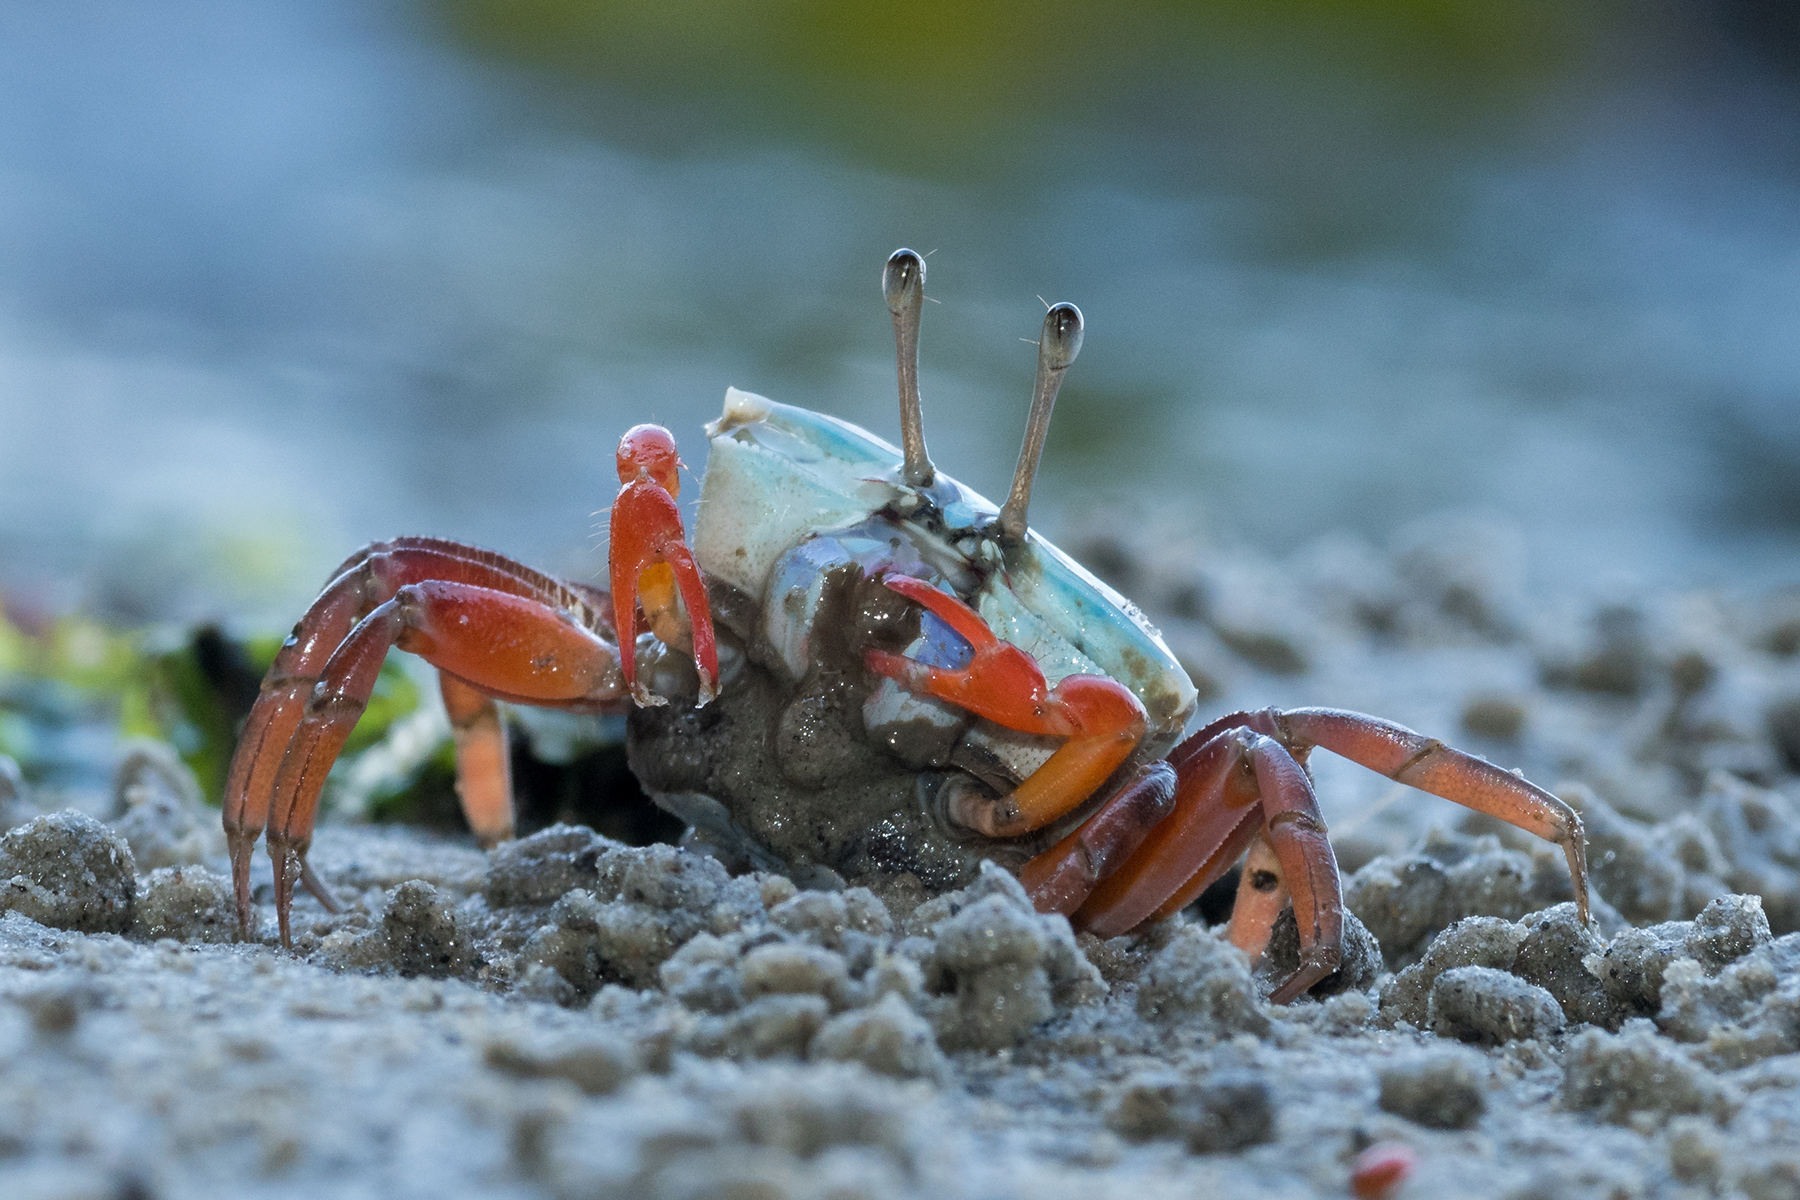 Close-up of a female fiddler crab